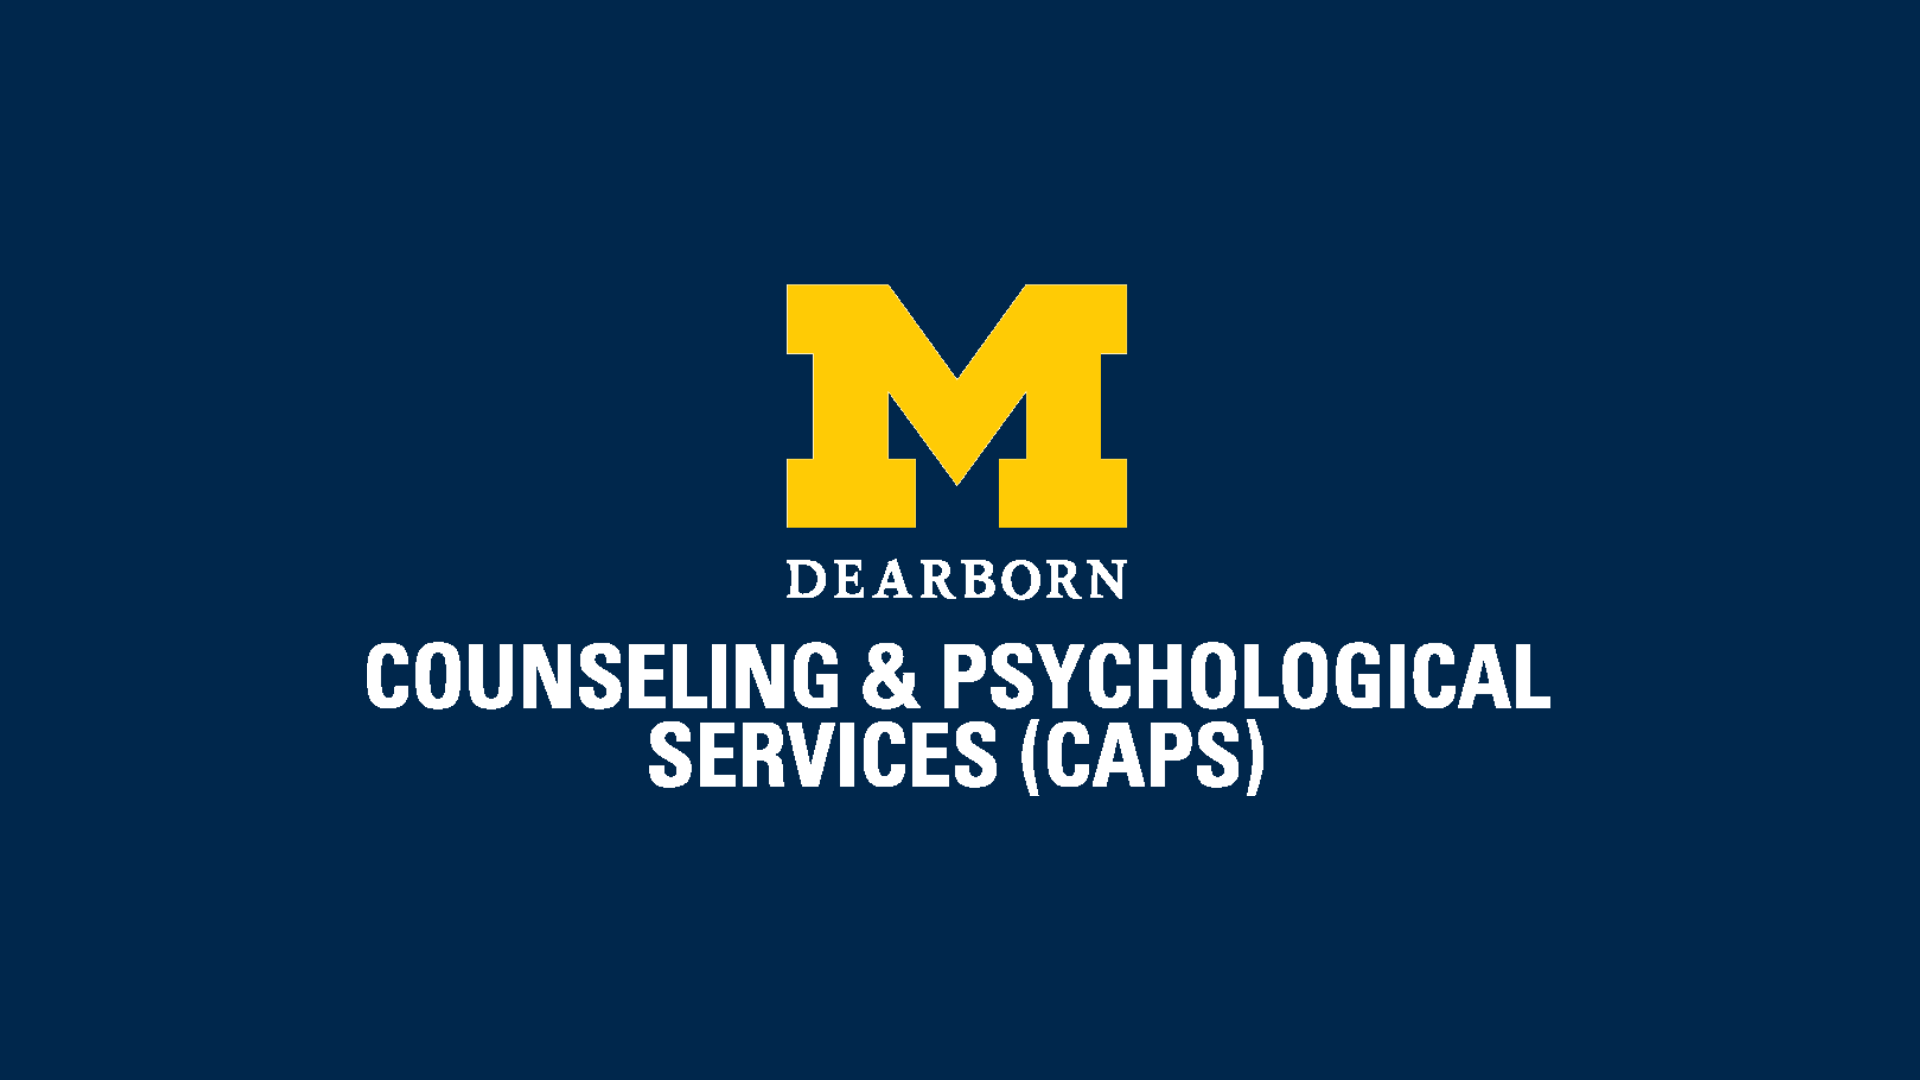 UM-Dearborn Counseling & Psychological Services (CAPS) logo